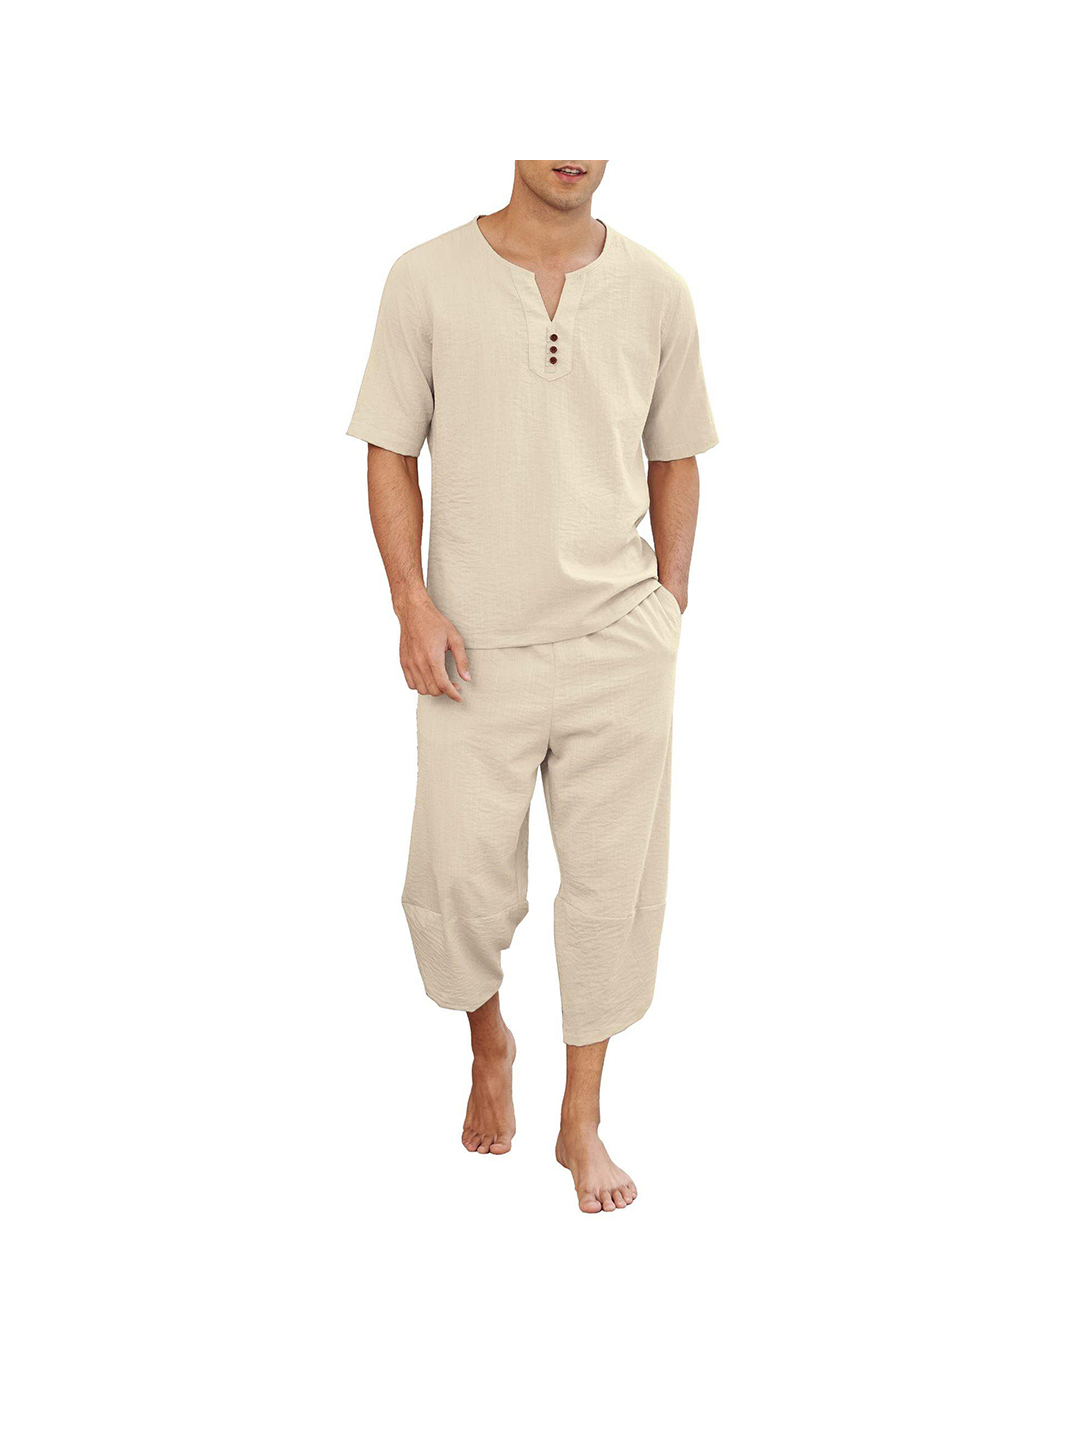 Men's Gary Casual Suit Cropped Pants Shirt Suit-poisonstreetwear.com